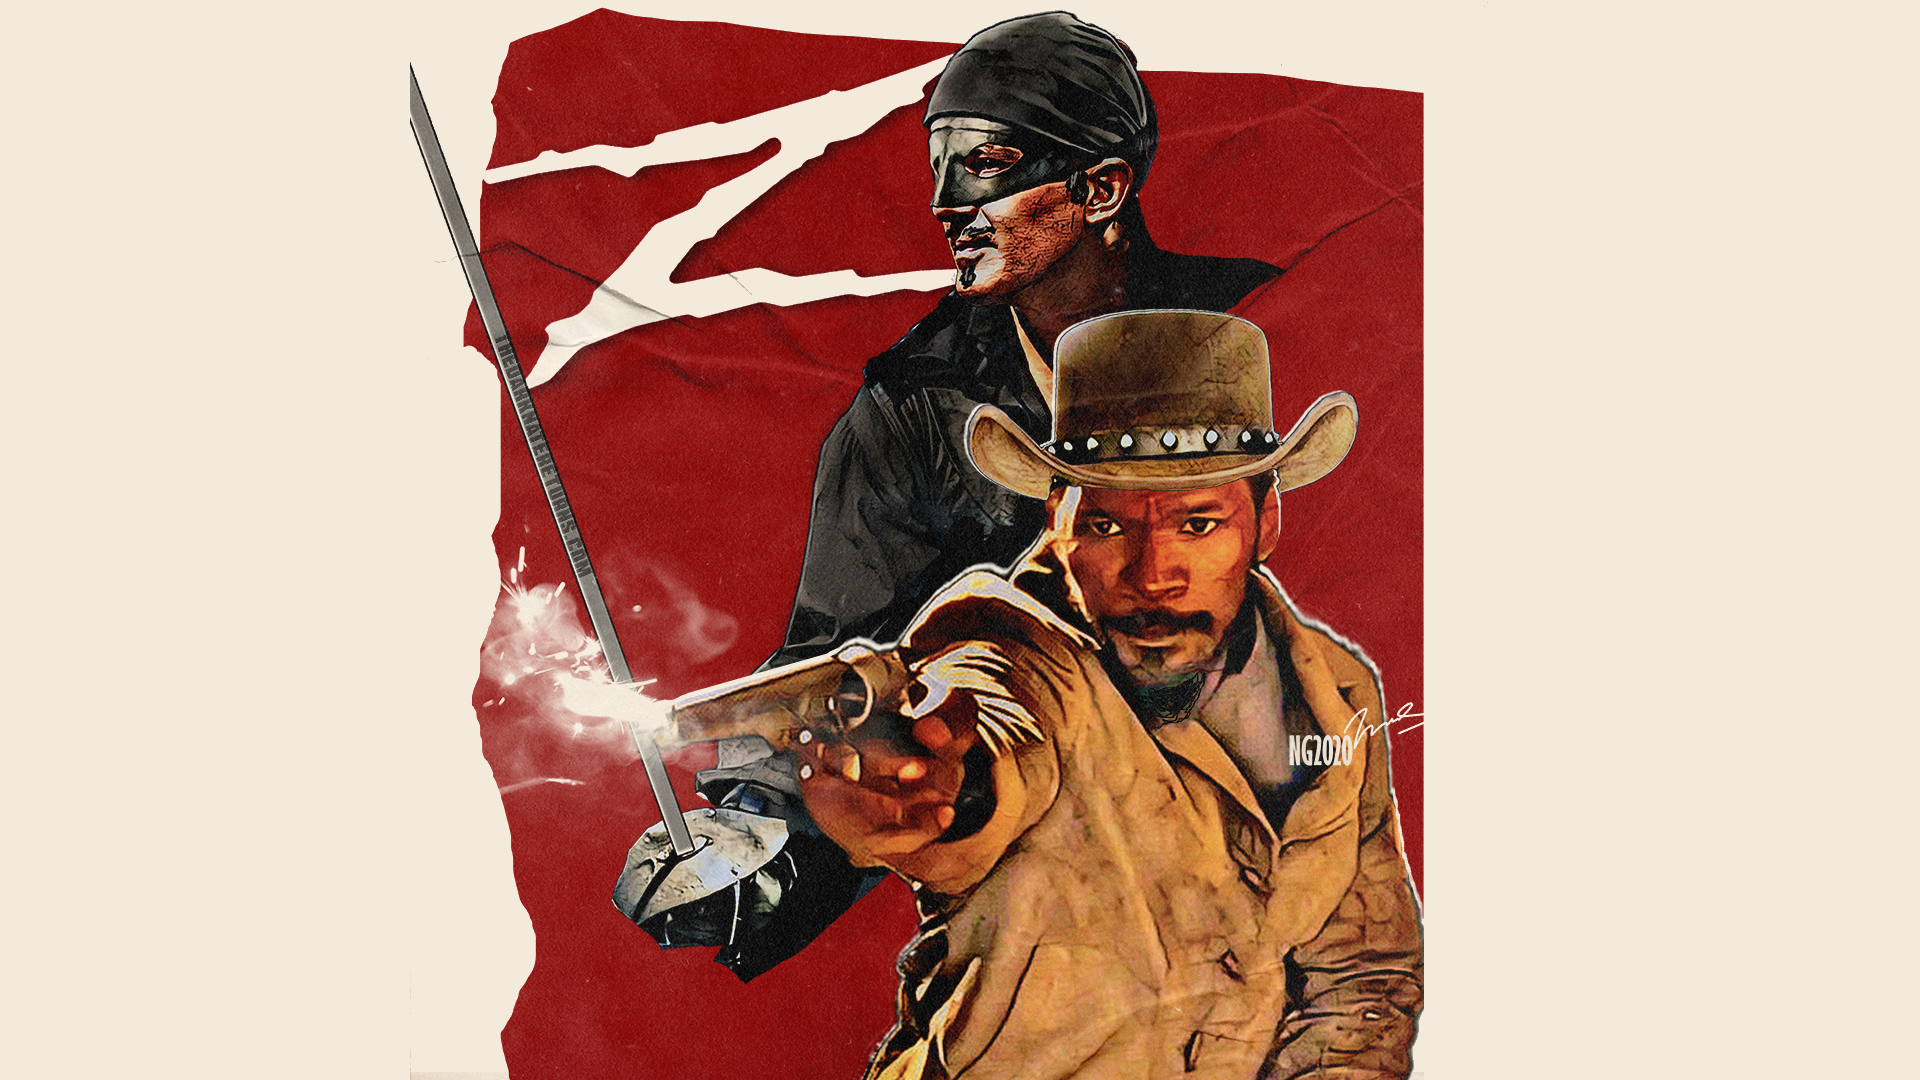 Quentin Tarantino's Django / Zorro Crossover Was A $500 Million Film